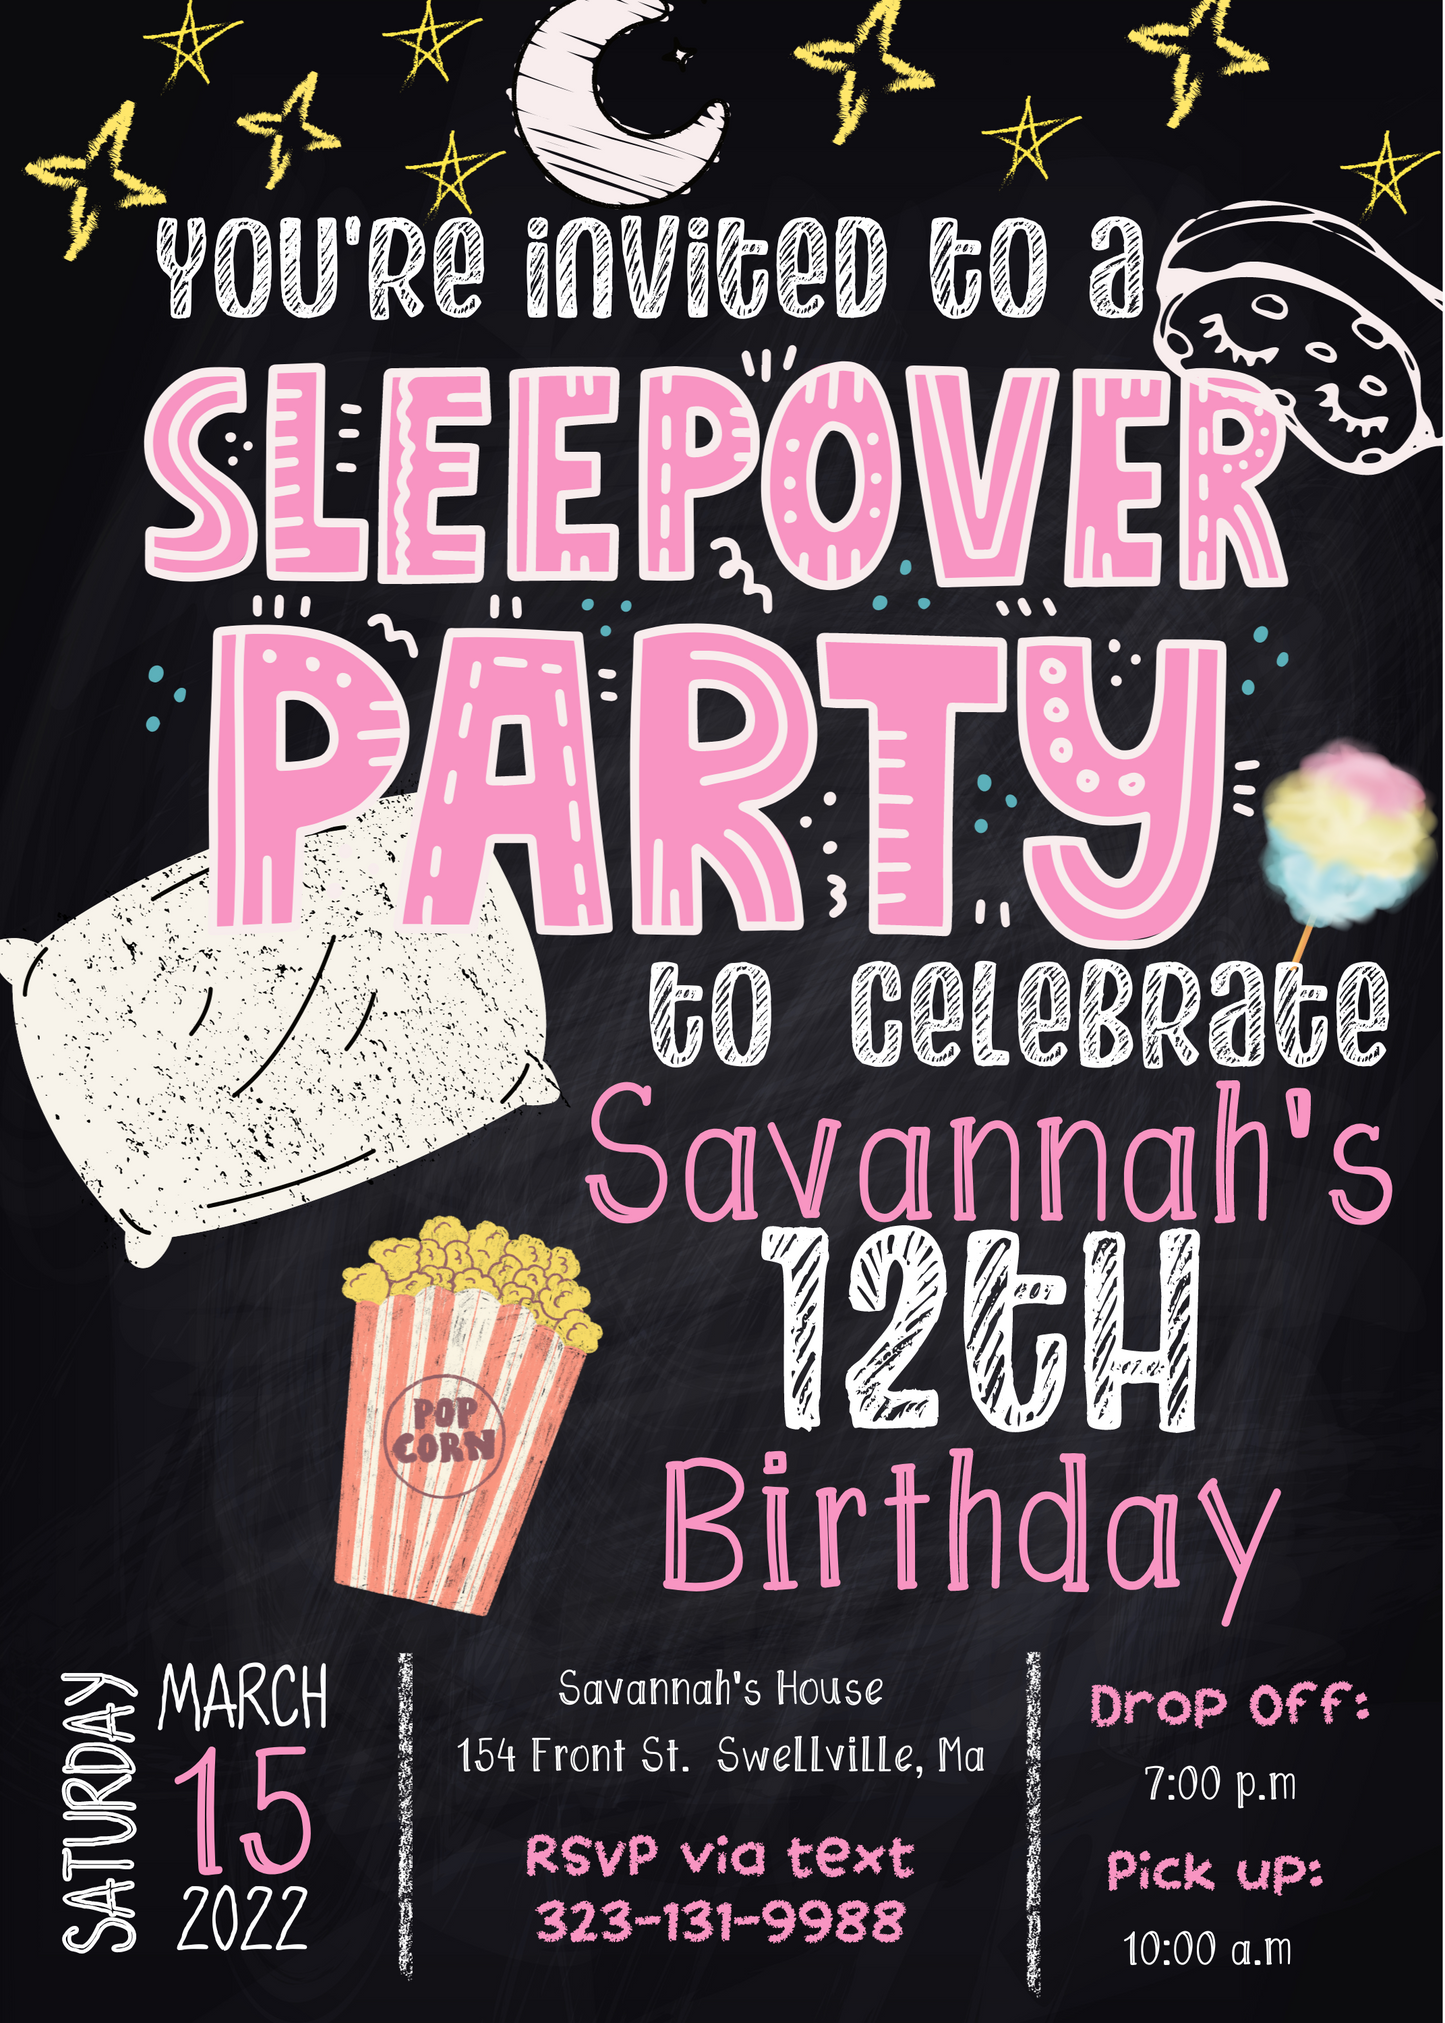 Sleepover Birthday Party Invitation